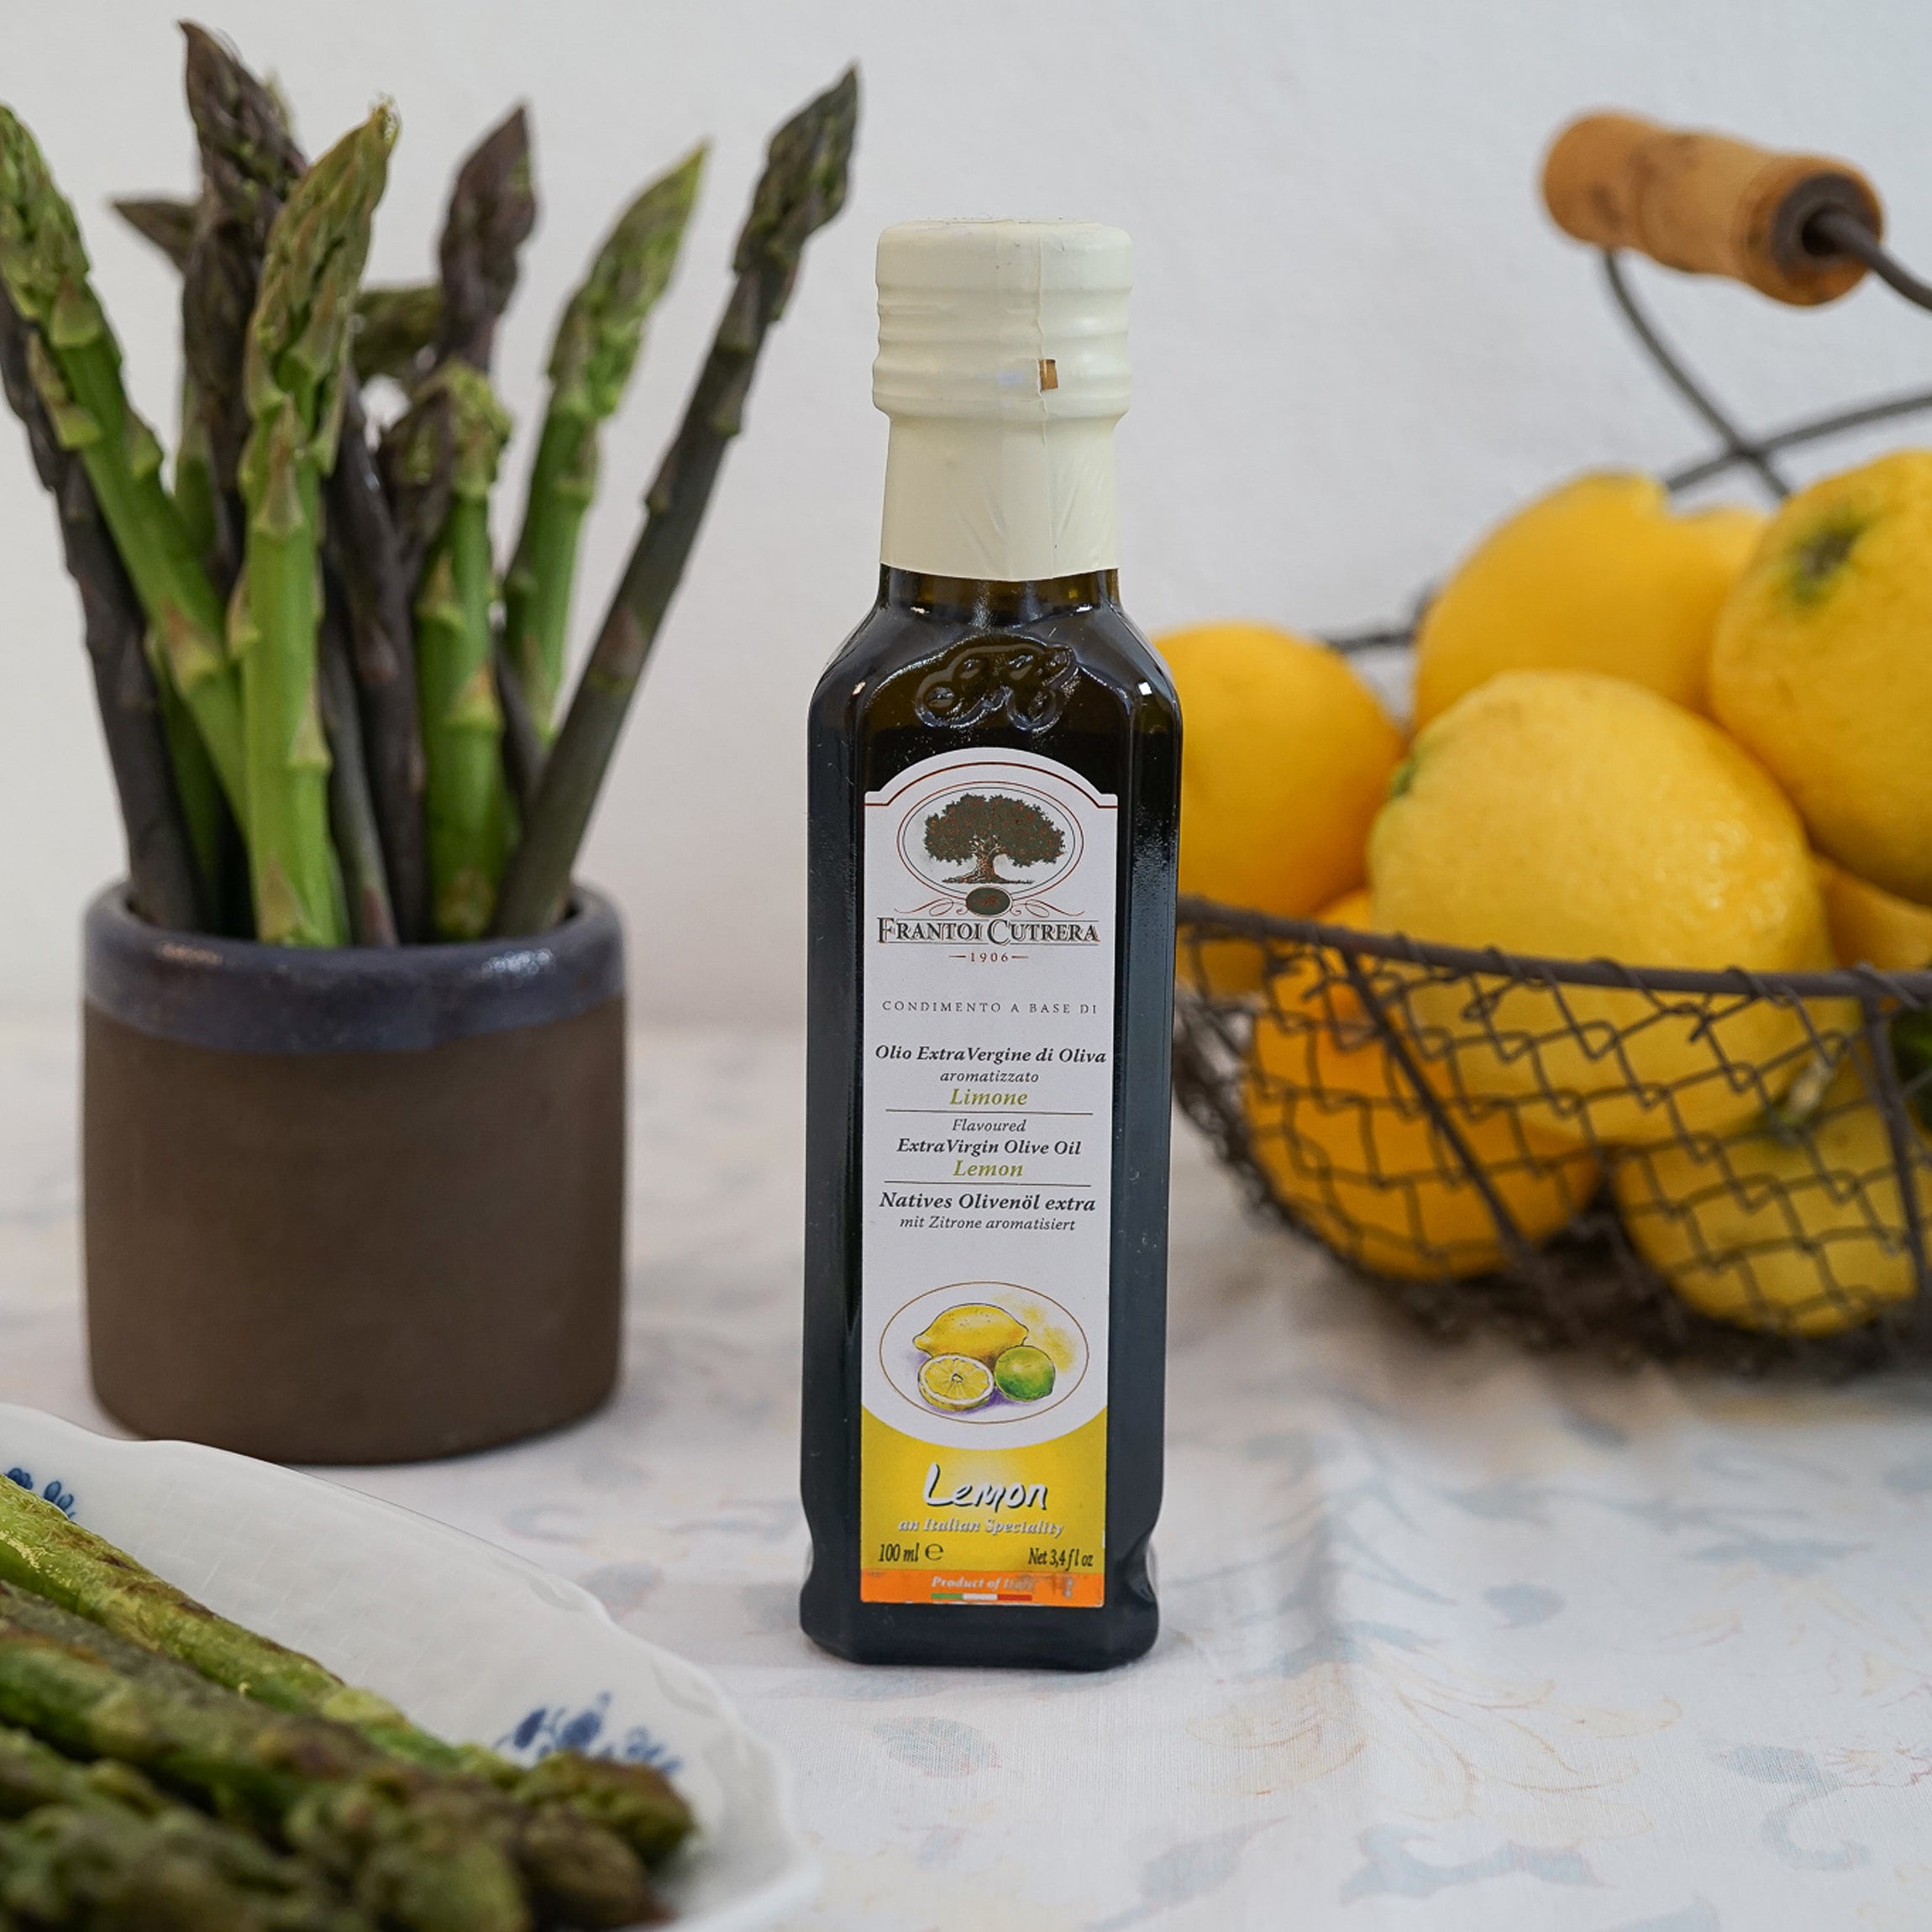 Lemon Flavored Extra Virgin Olive Oil by Frantoi Cutrera